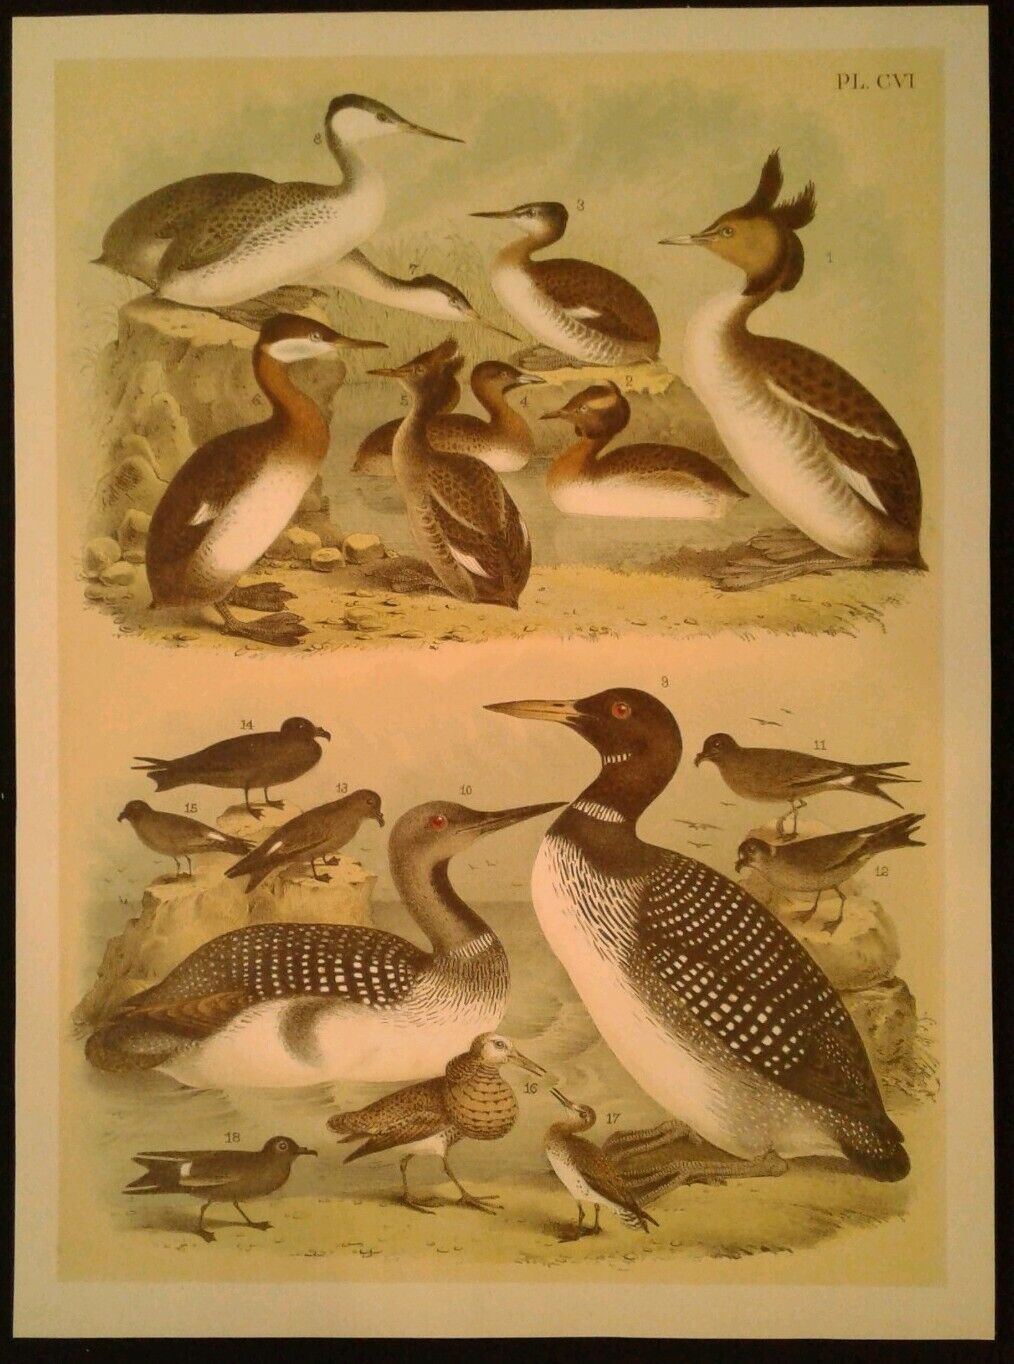 1878 Rare Antique Bird Print - Studer\'s Plate CVI - Various Birds